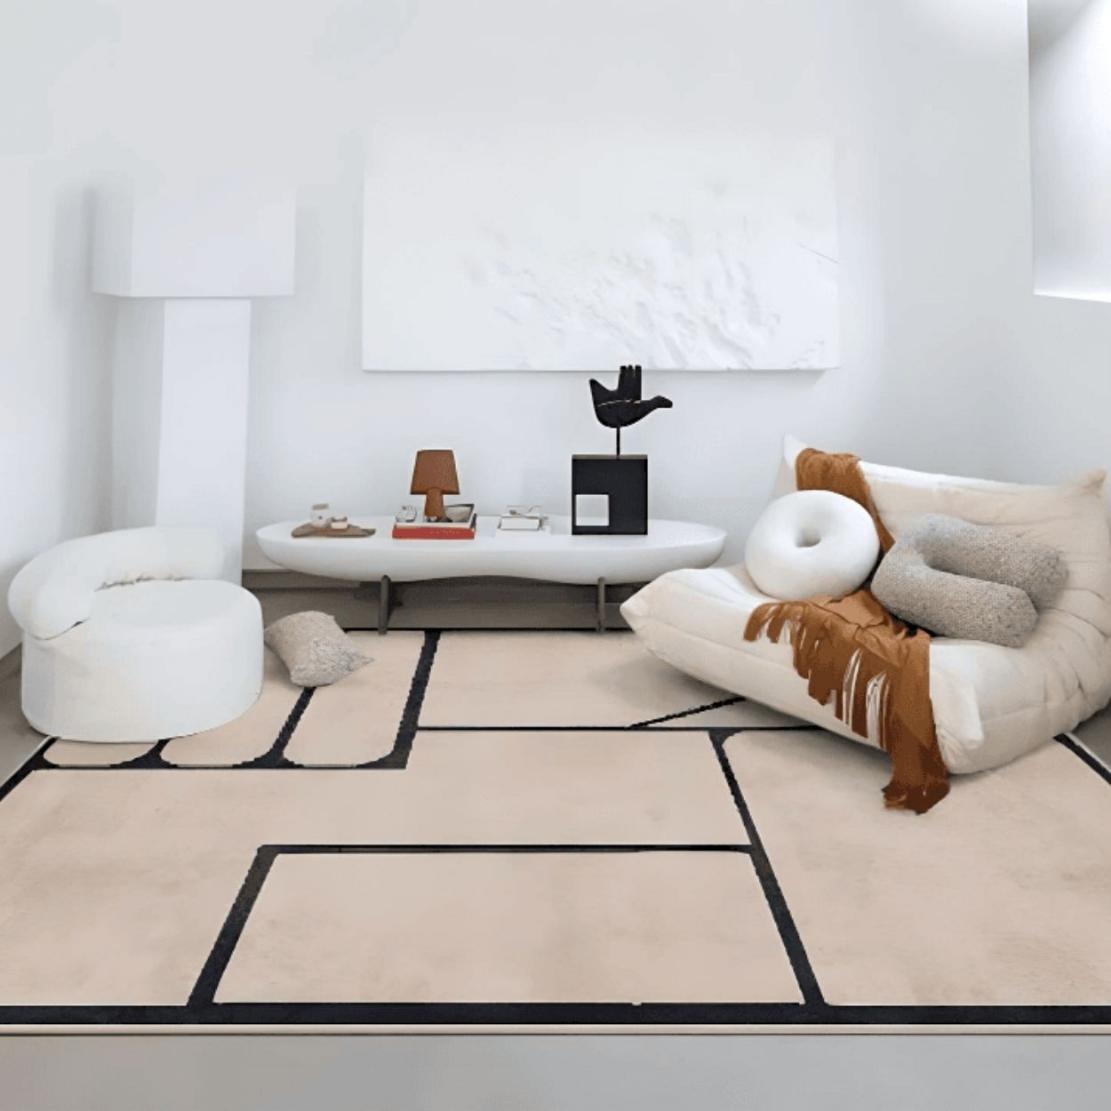 Geometric abstract modern livingroom decorative area rug